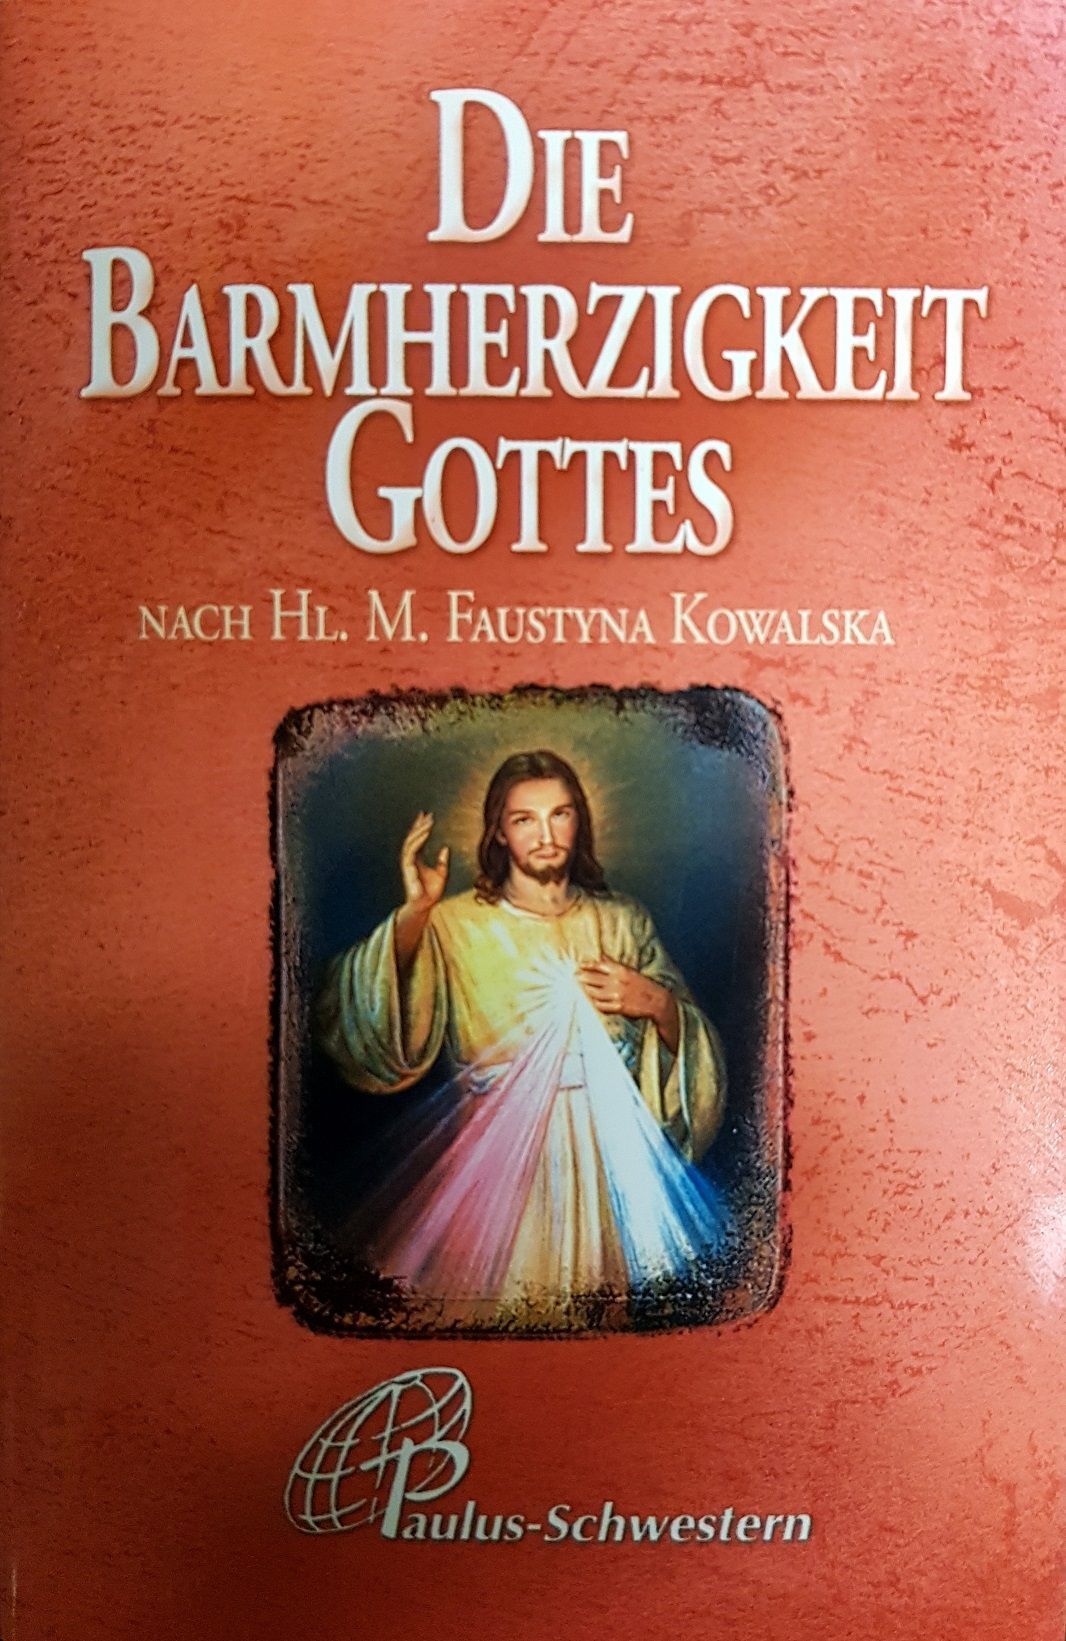 Die Barmherzigkeit Gottes - Nach Hl. M. Faustyna Kowalska